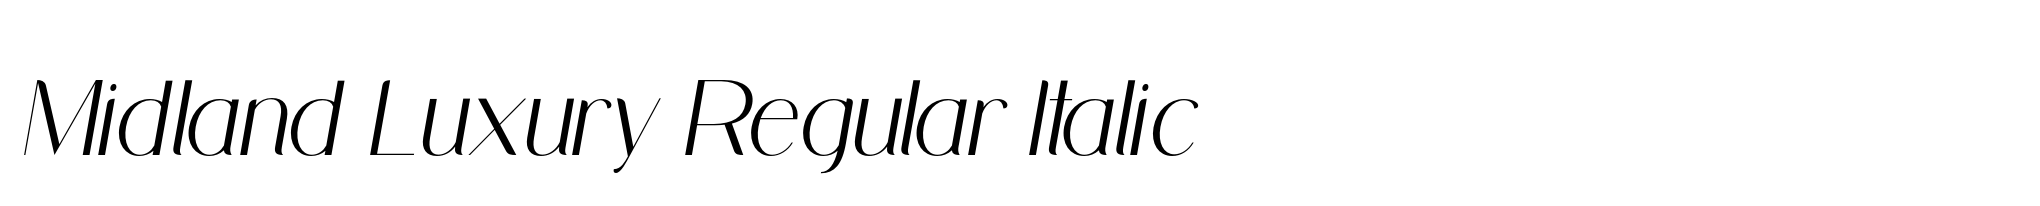 Midland Luxury Regular Italic image